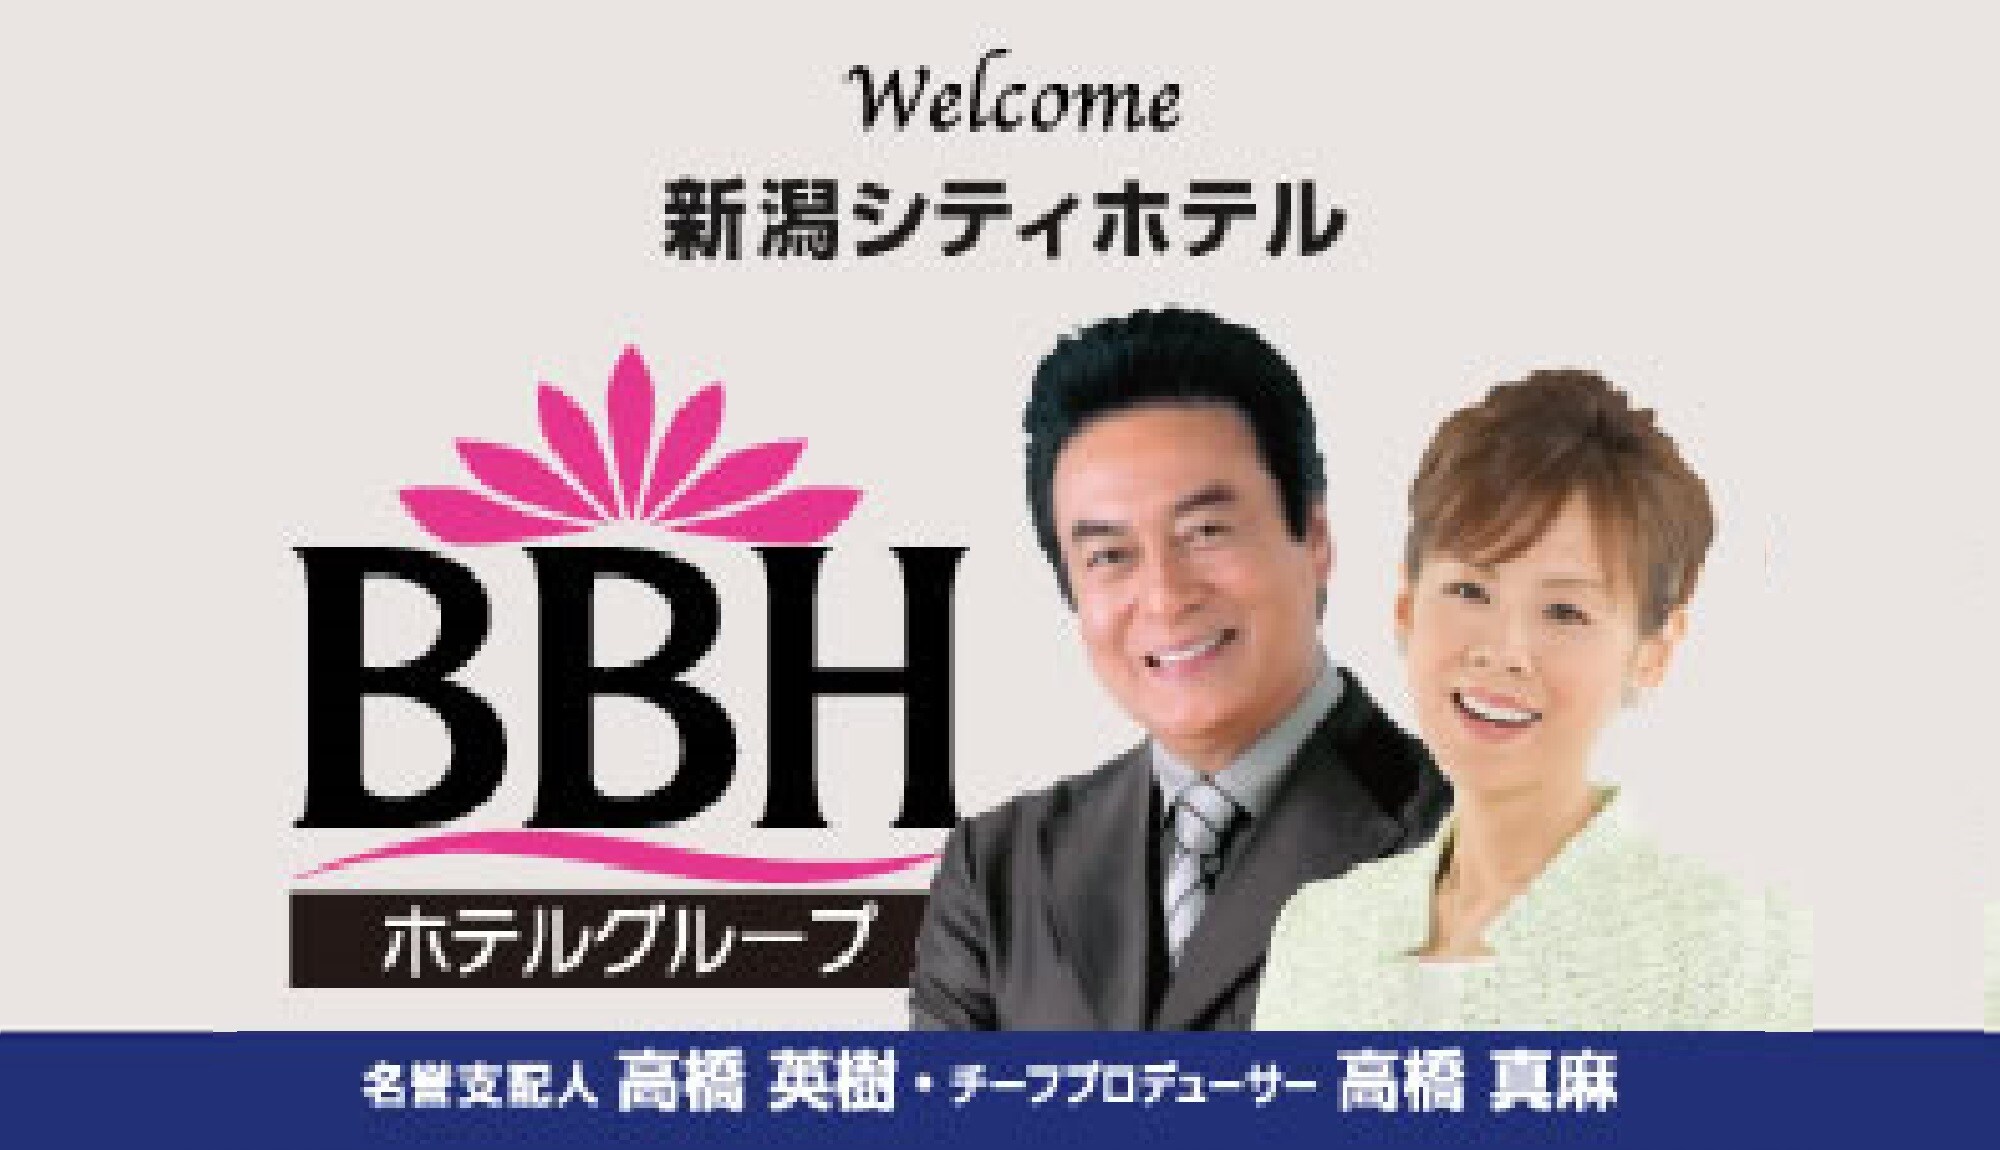 Breezbay Hotel Group ♪ Expanding nationwide Honorary Manager Hideki Takahashi & Chief Producer Maasa Takahashi ♪